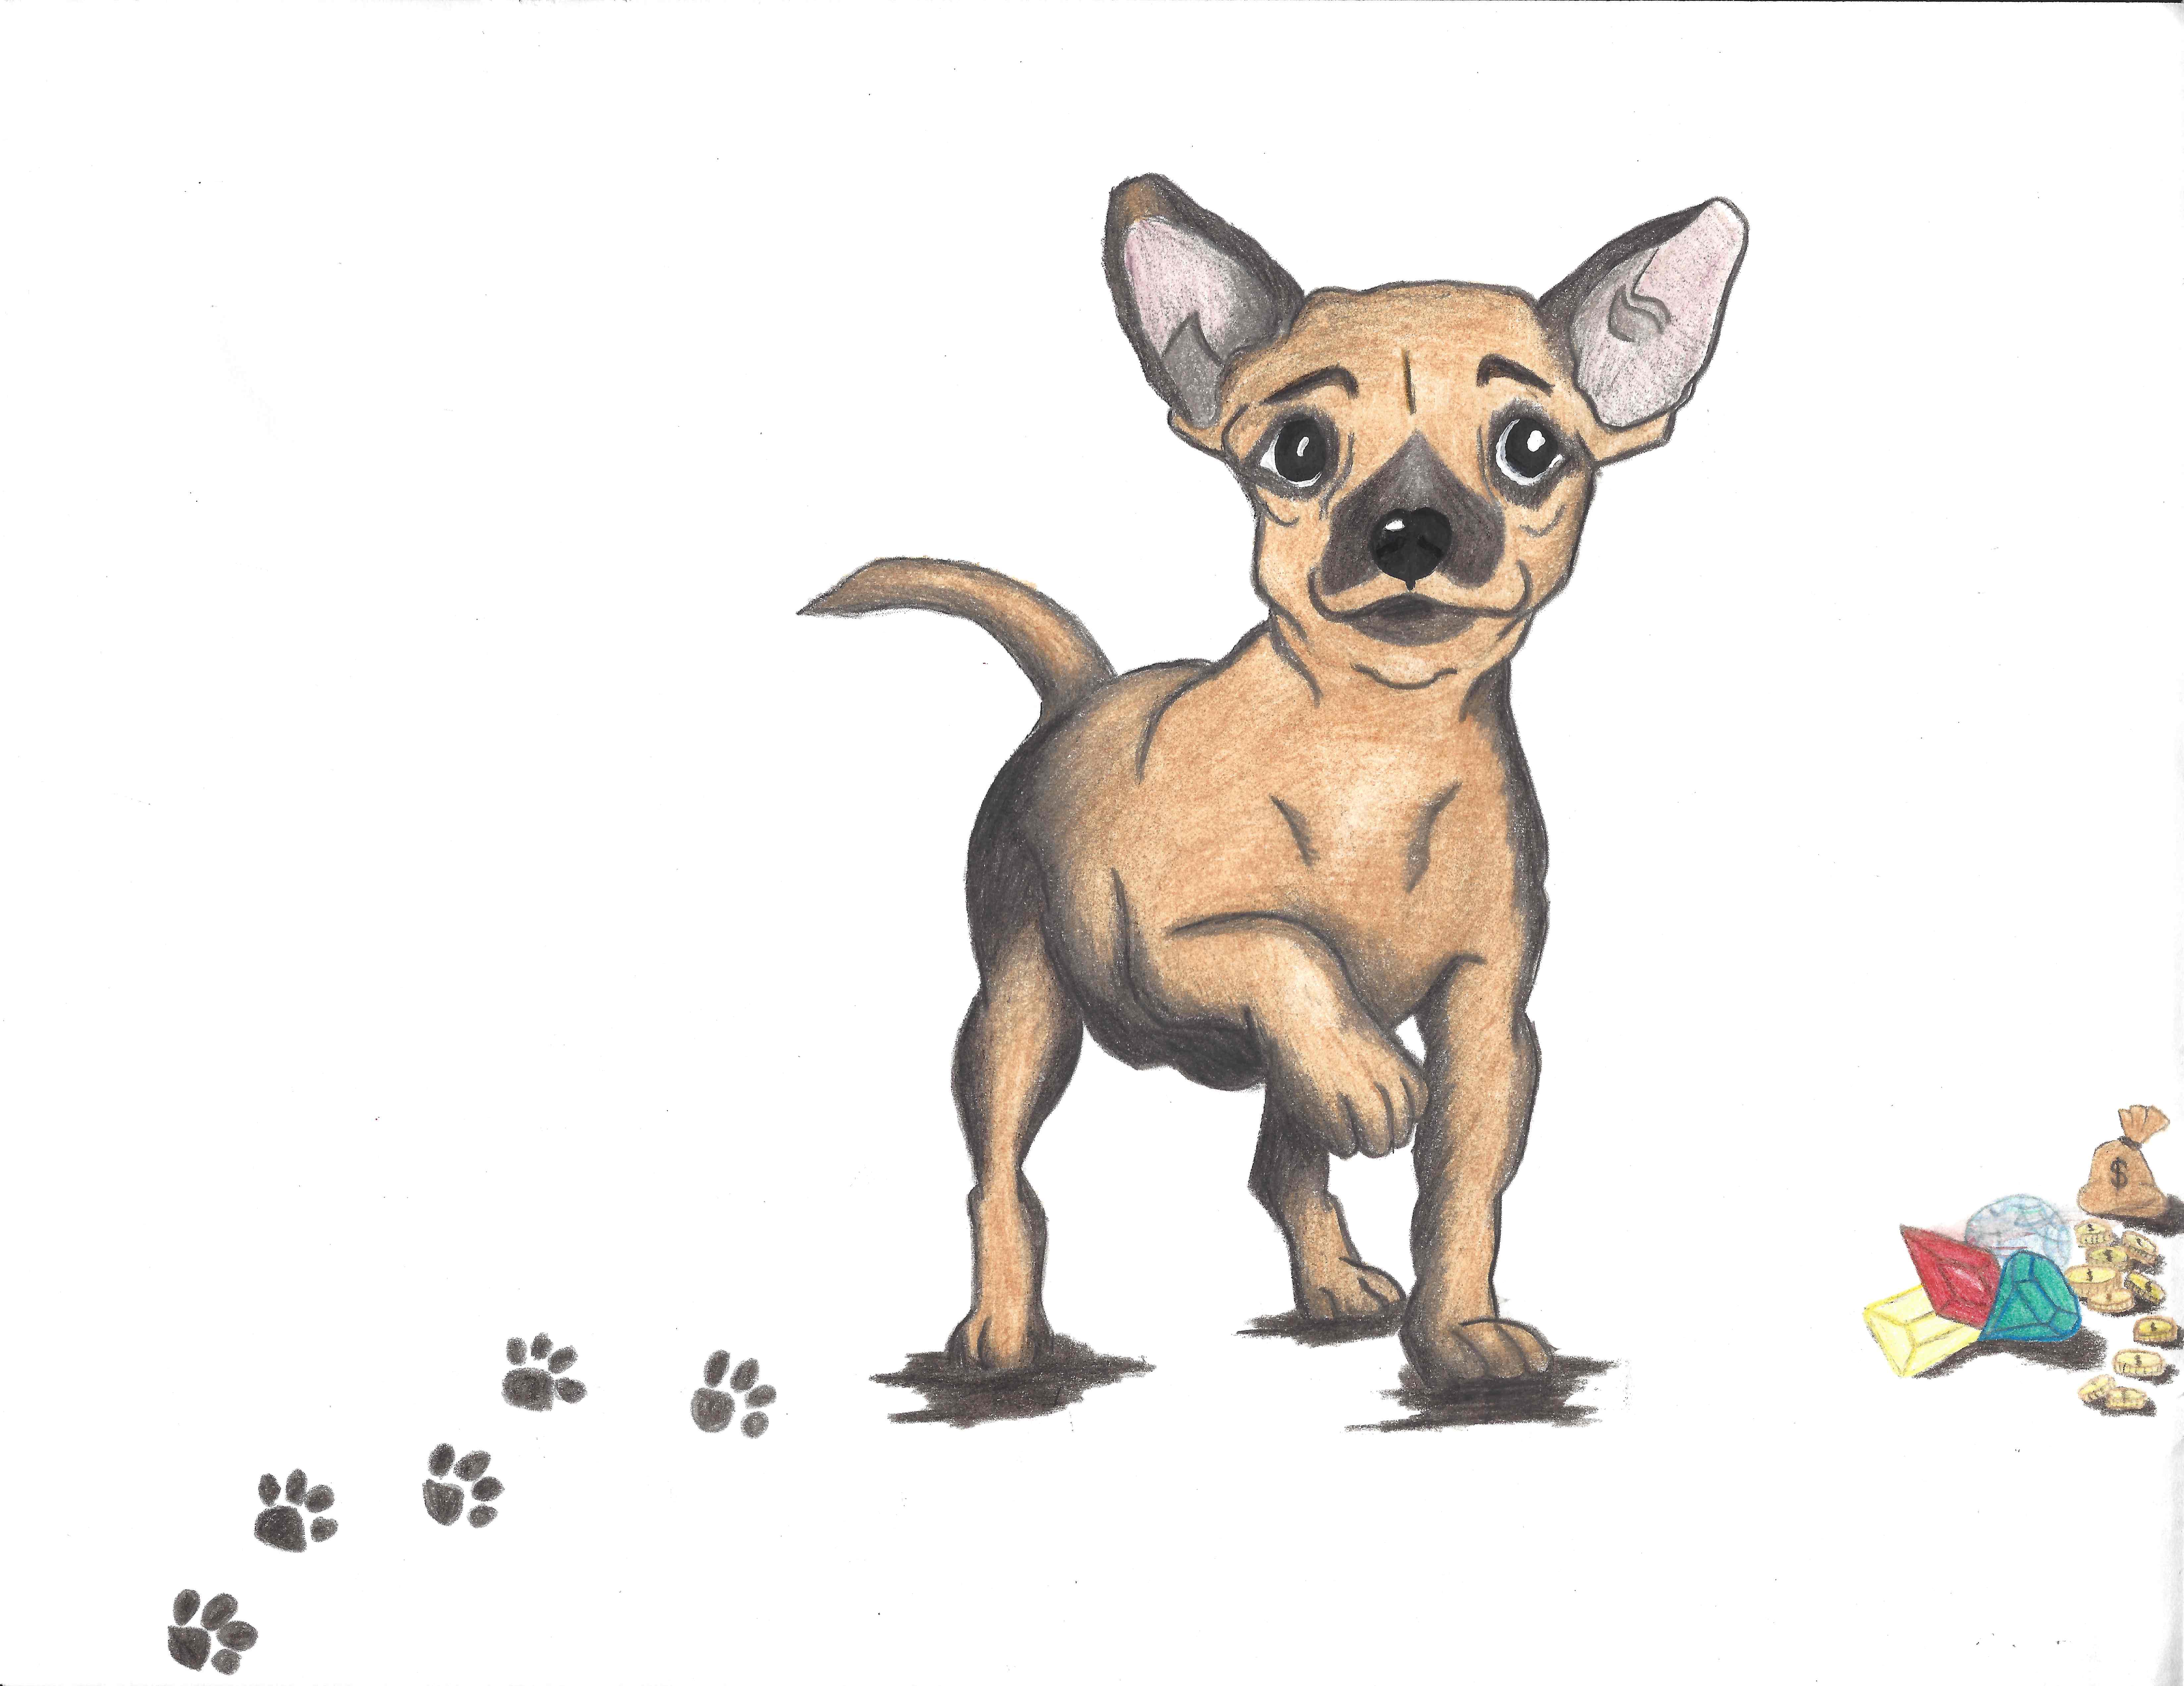 Chuy El Chihuahua – a kickstarter campaign